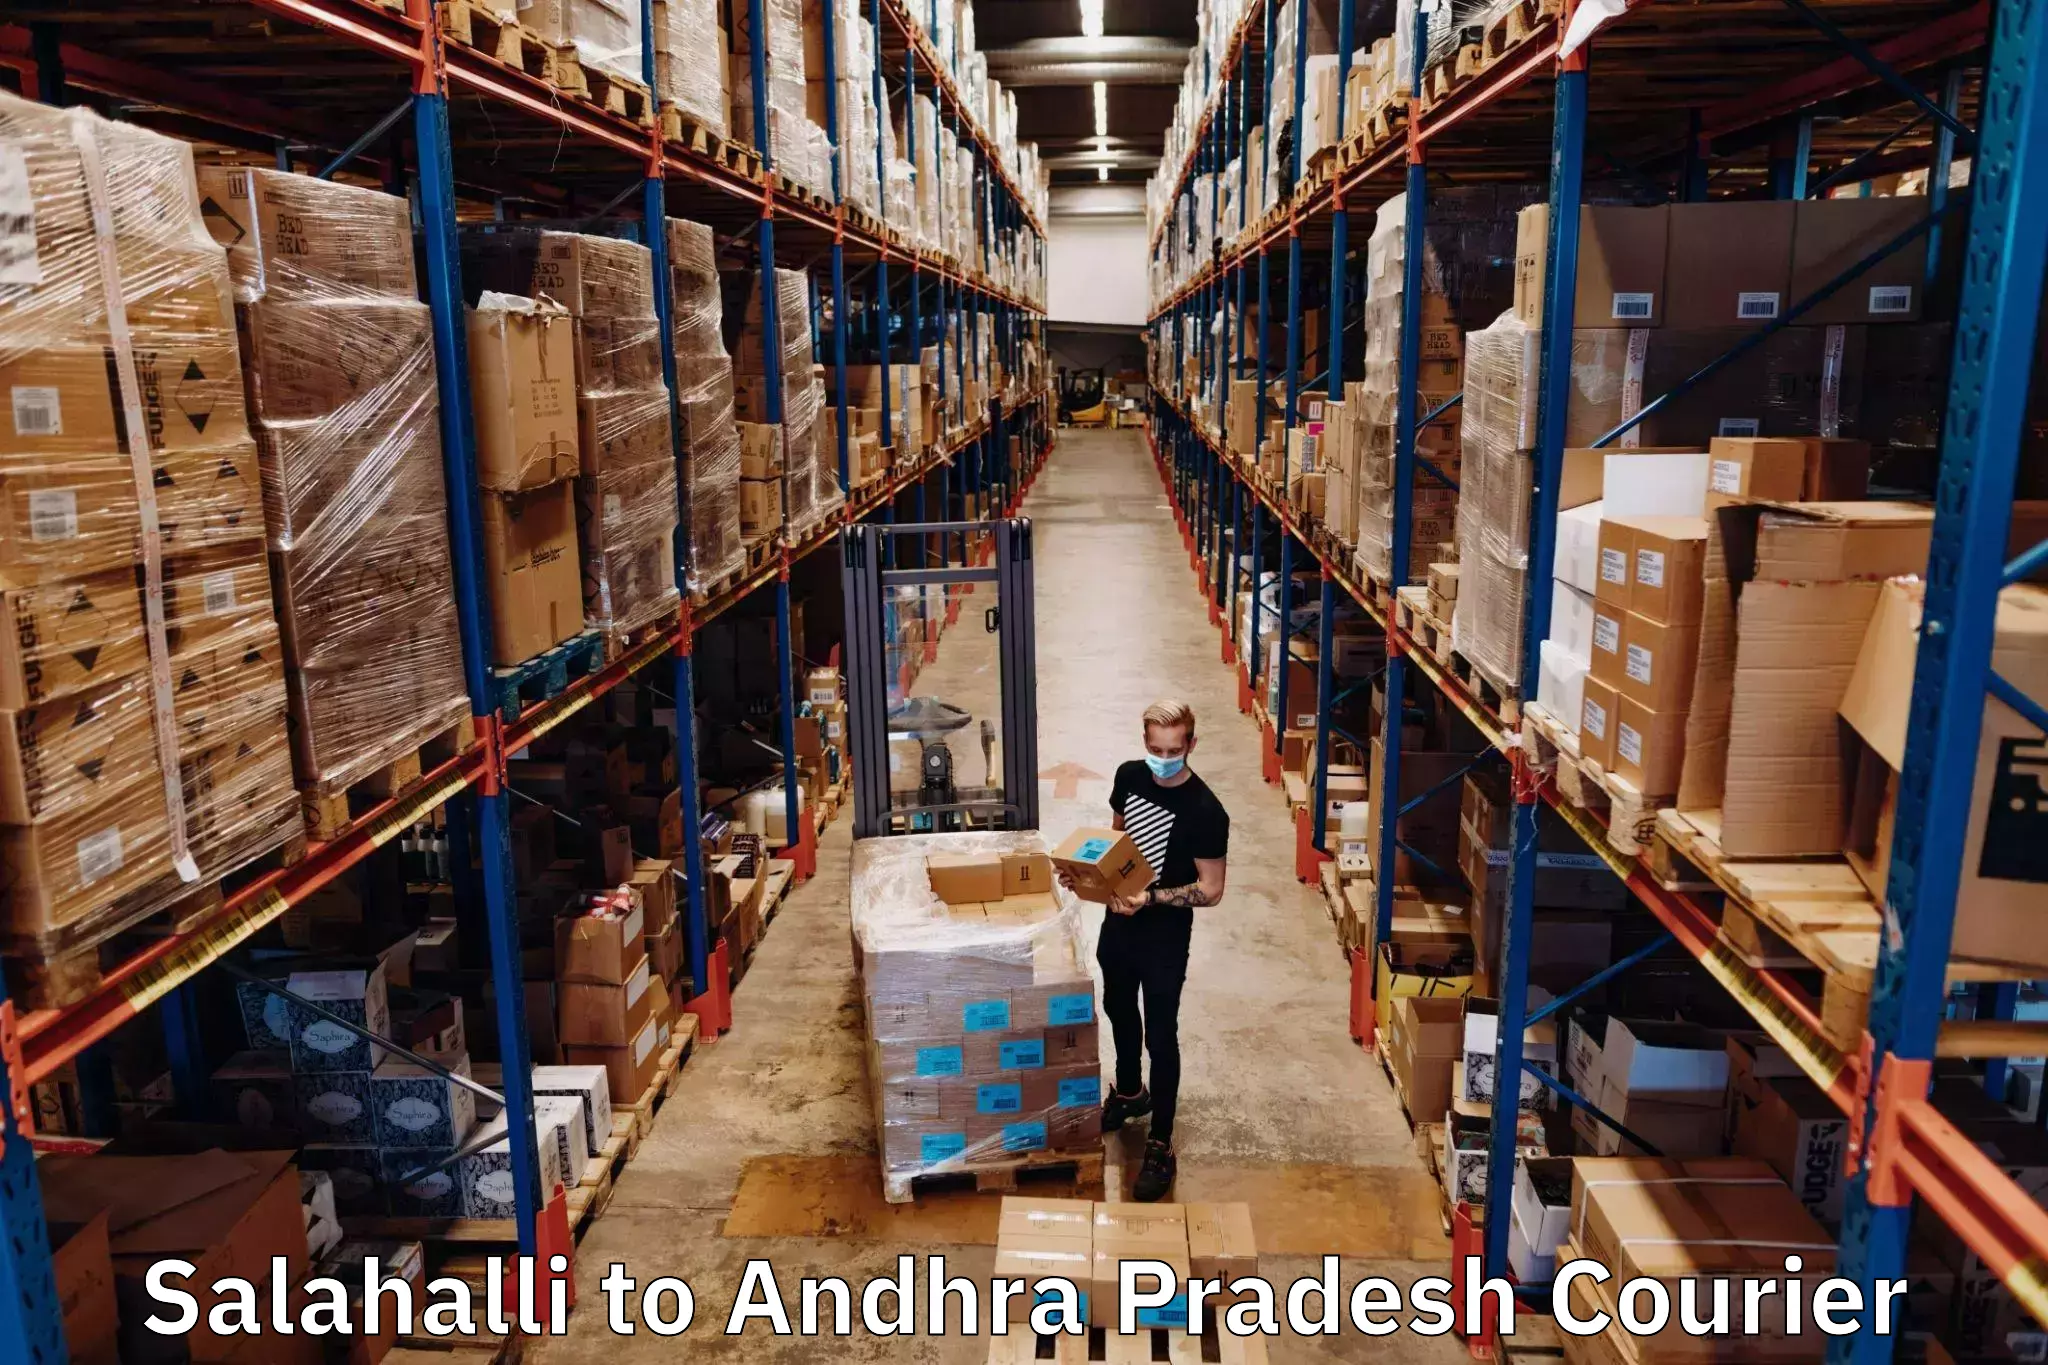 Digital courier platforms Salahalli to Andhra Pradesh